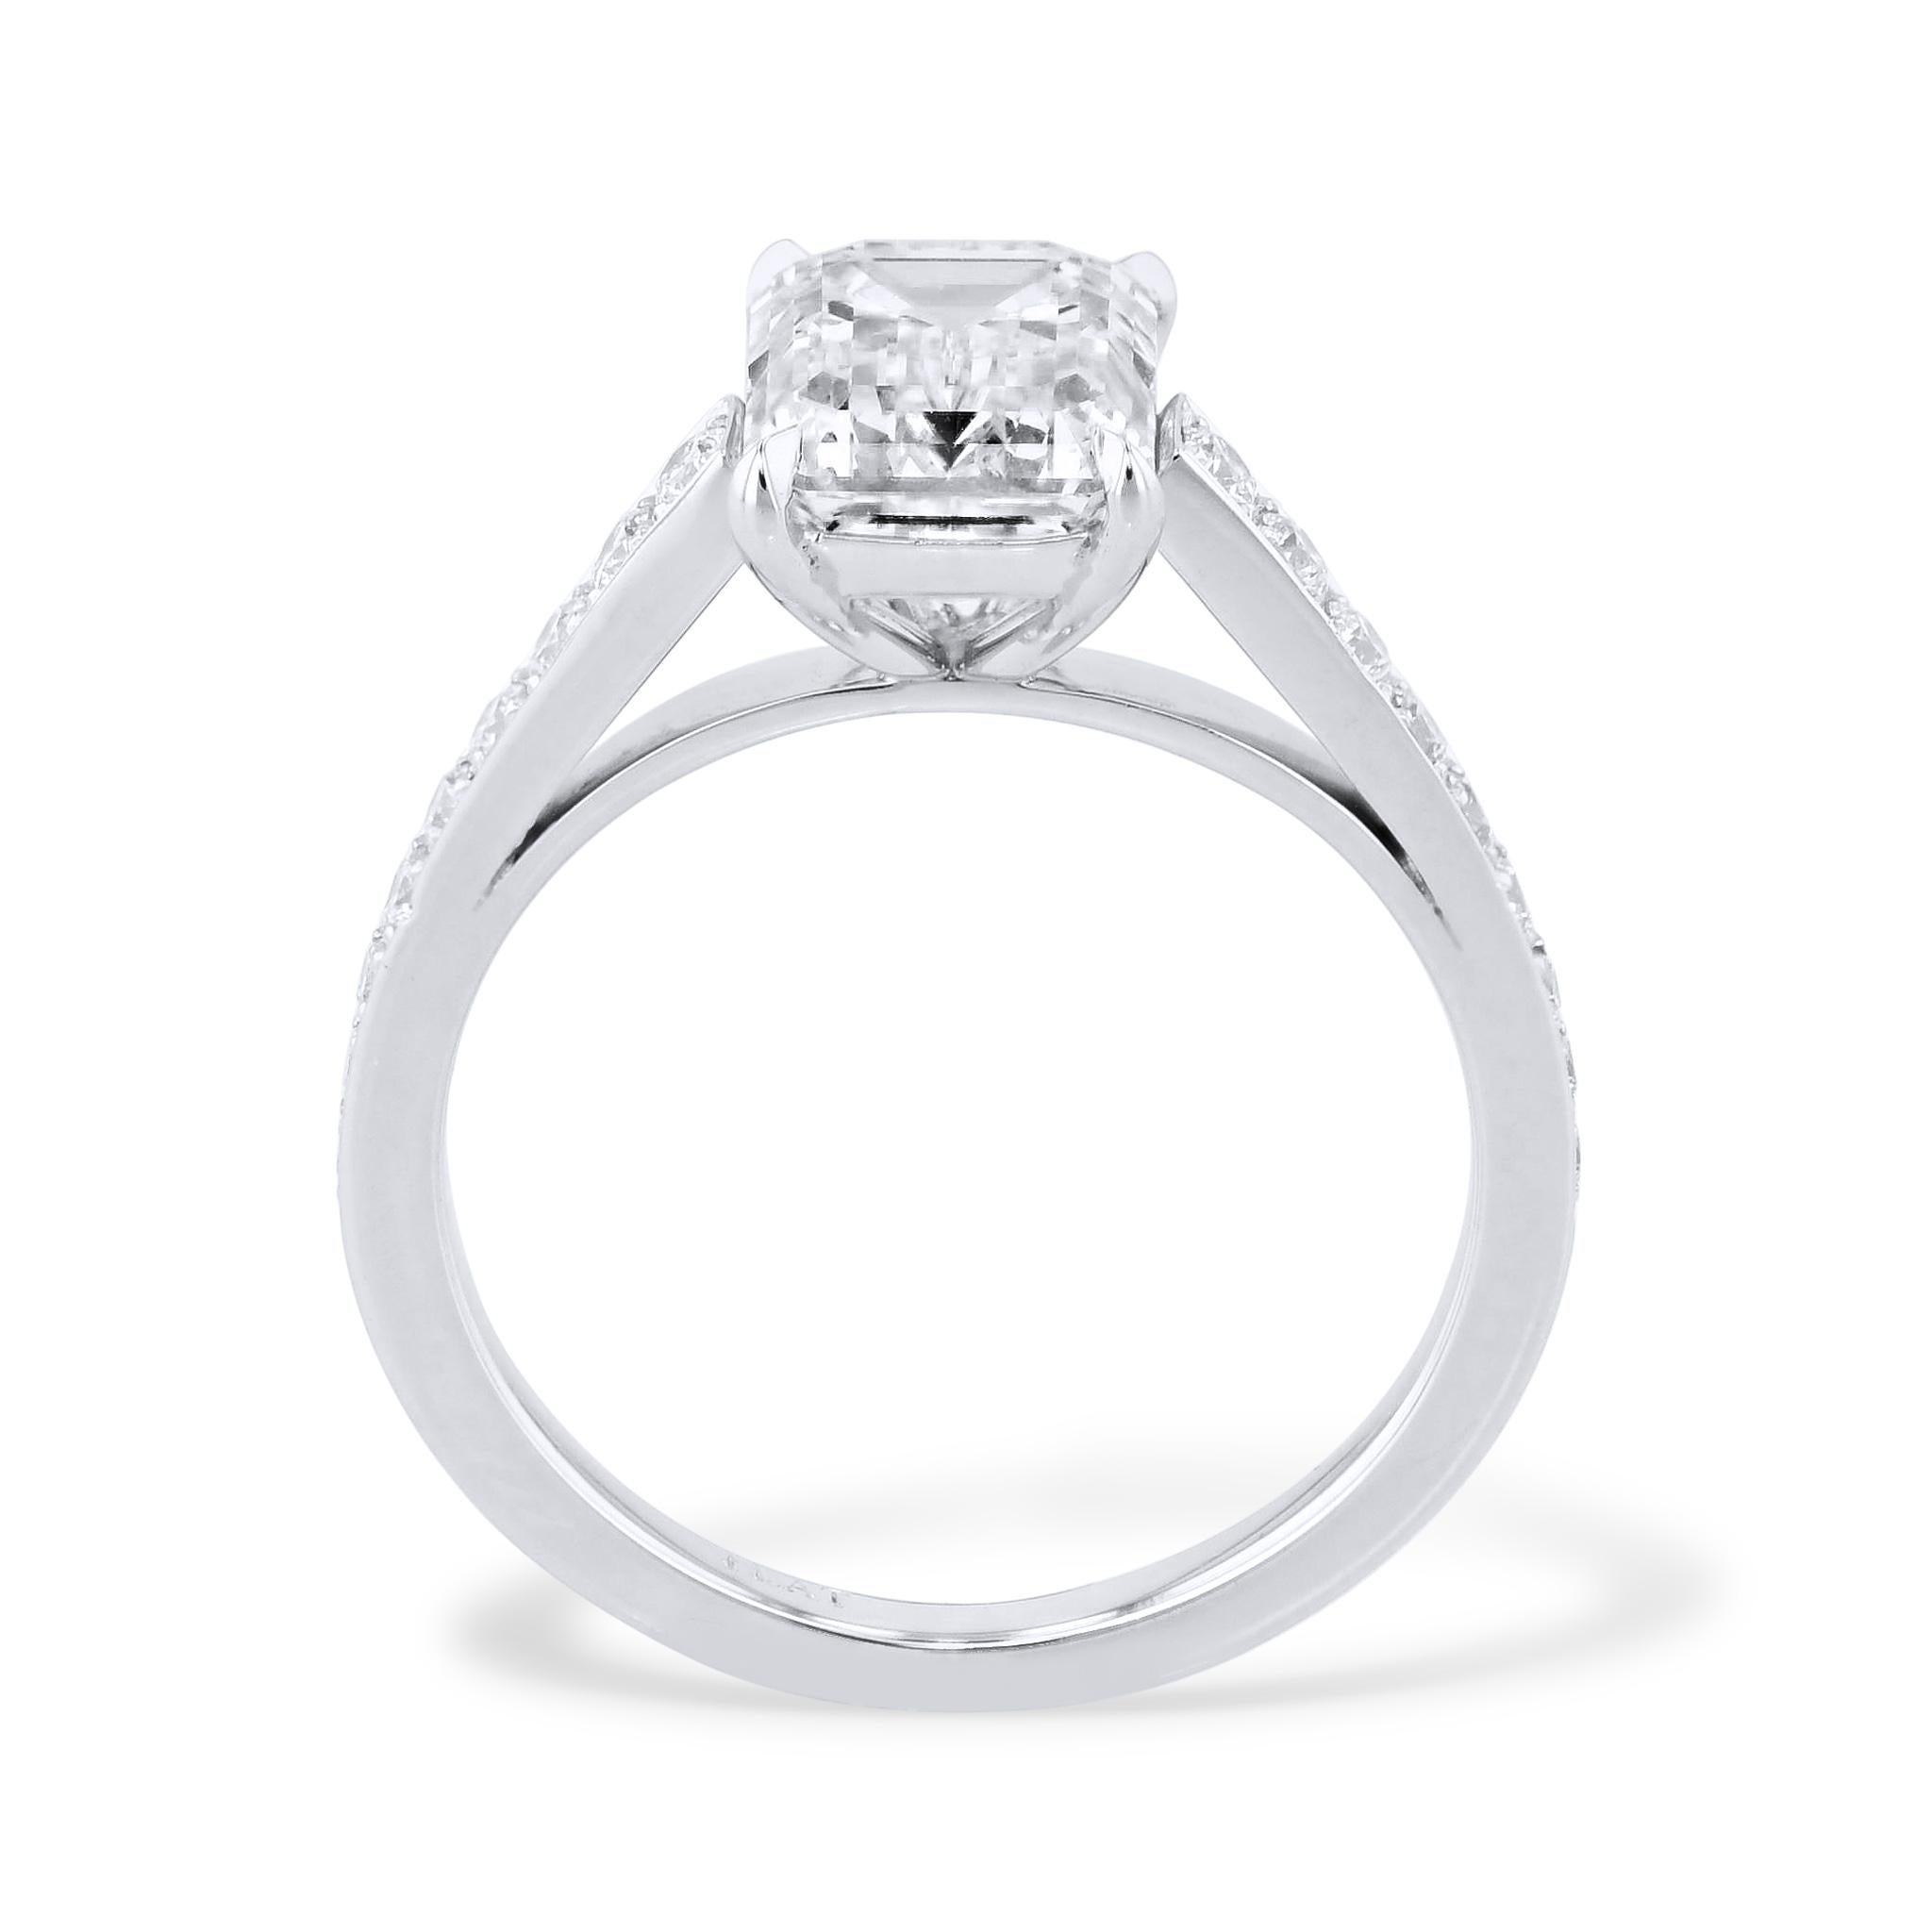 20.03-carat emerald-cut engagement ring